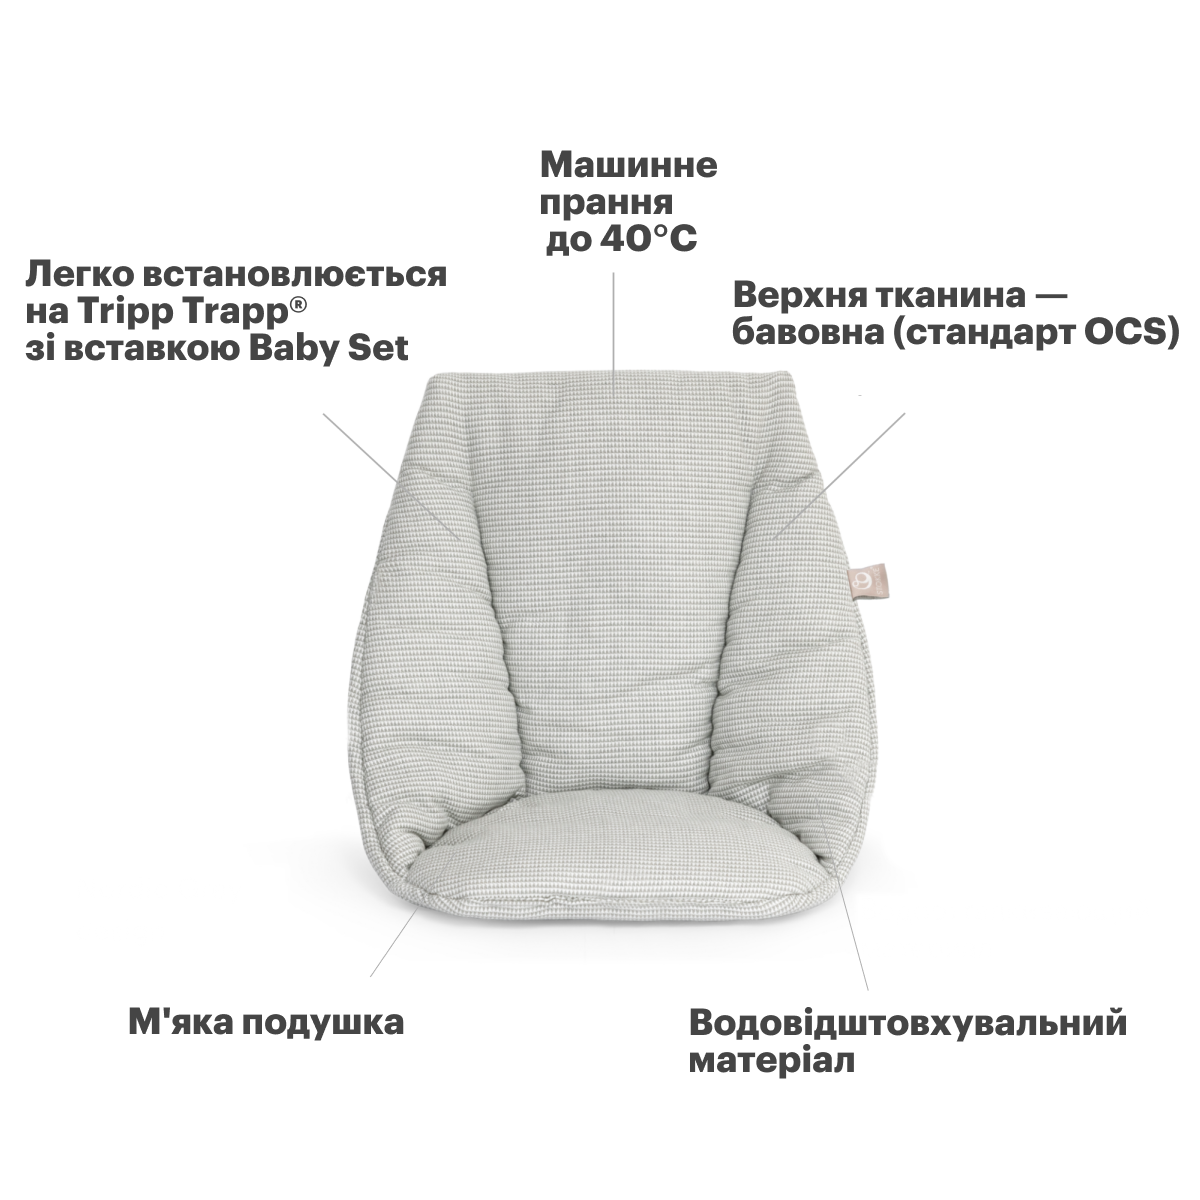 Текстиль Stokke Baby Cushion для стульчика Tripp Trapp Nordic grey (496007) - фото 3